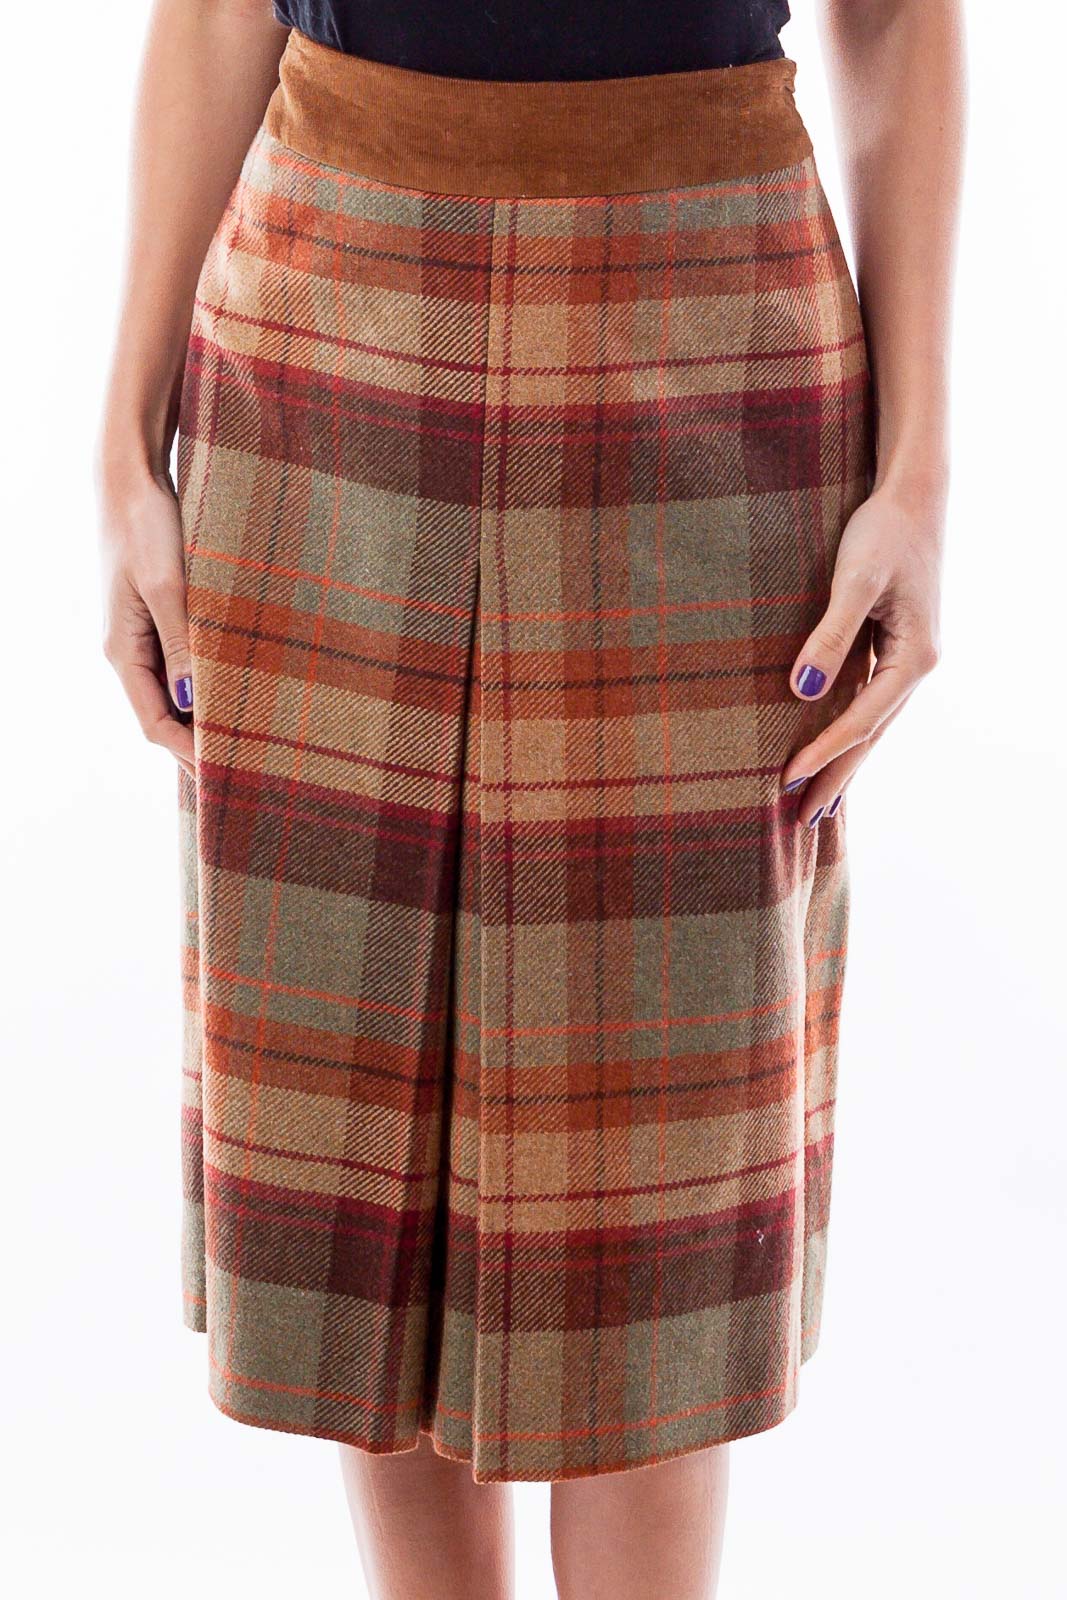 Brown & Orange Plaid A-Line Skirt Front